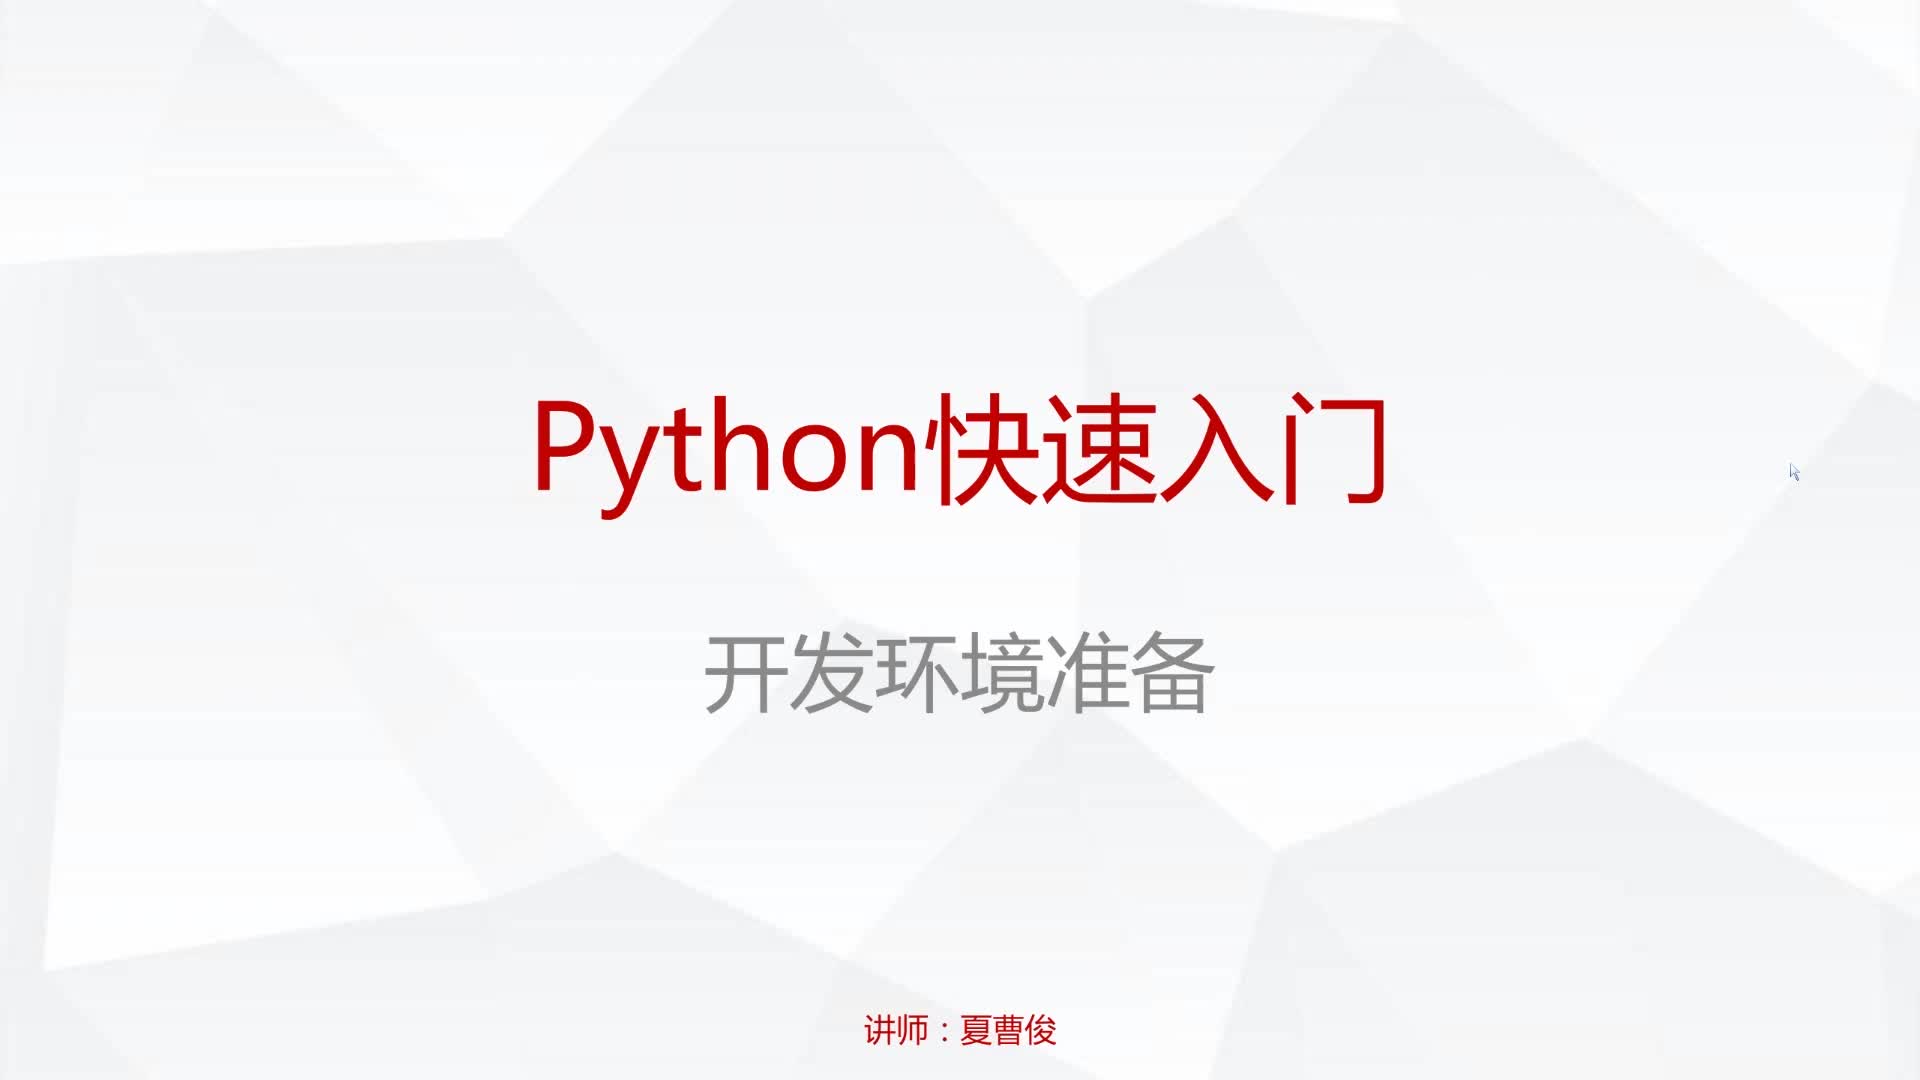 Python & C/C++联合编程实战